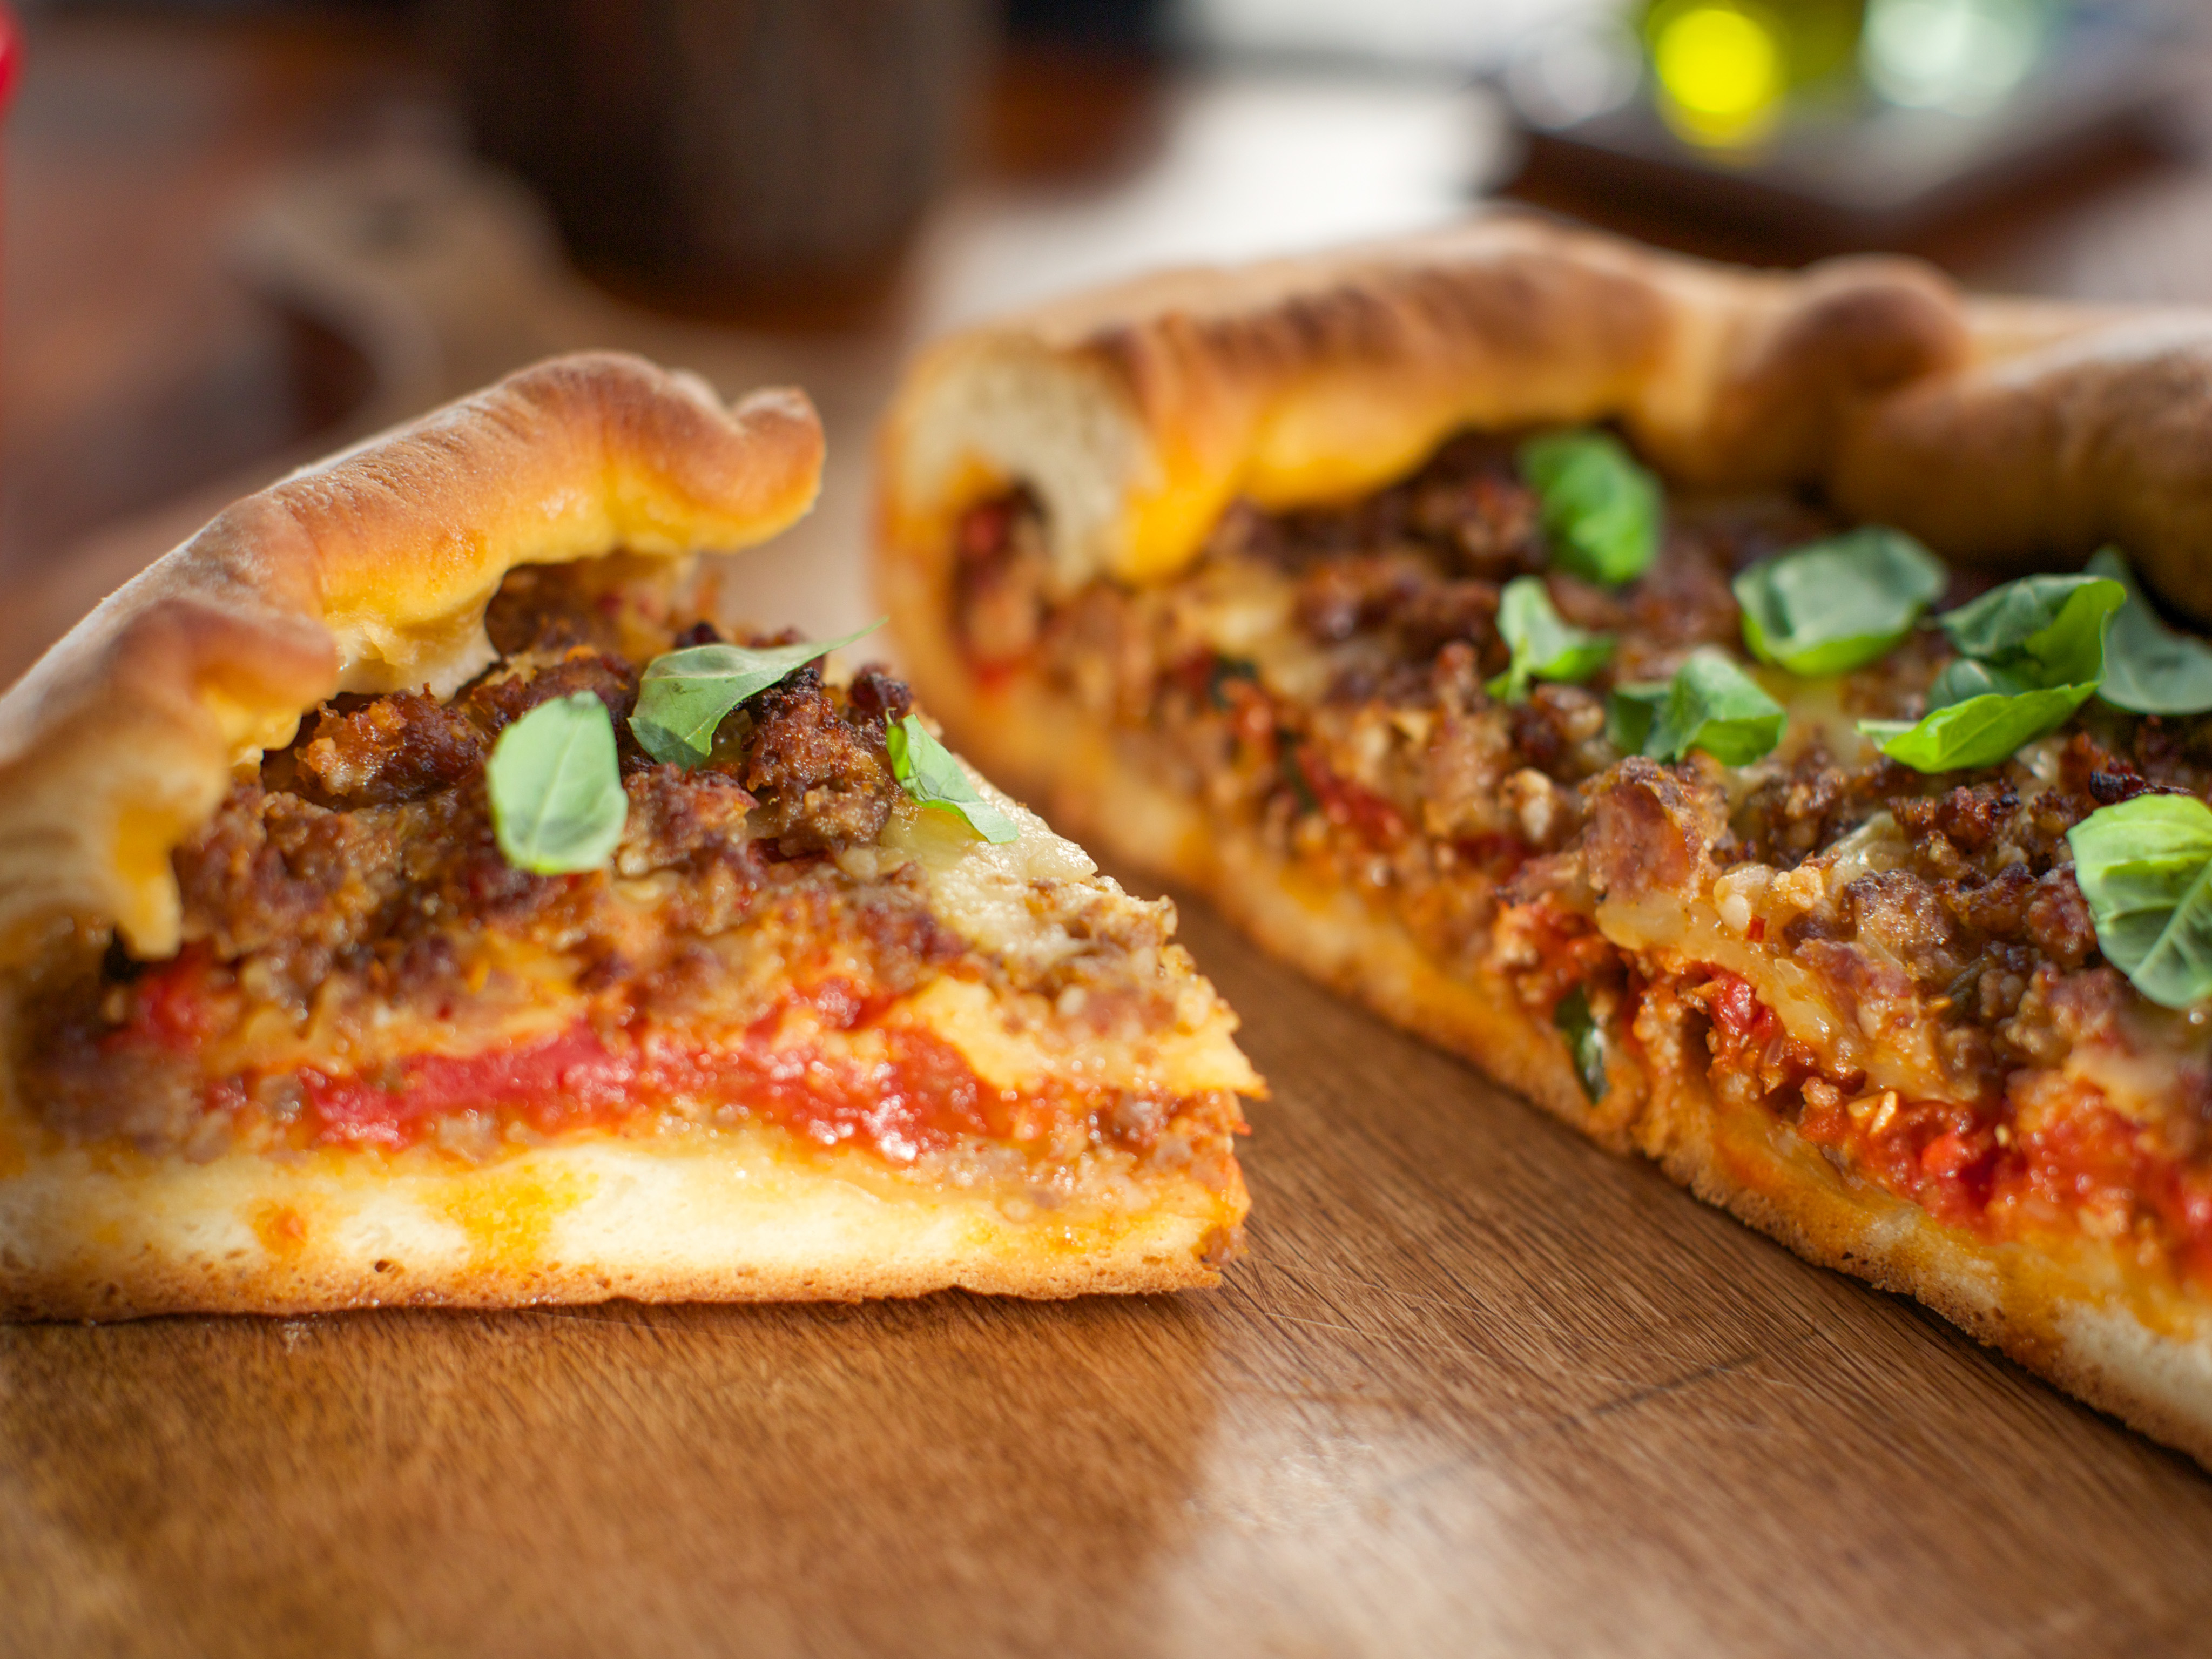 https://www.foodnetwork.com/content/dam/images/food/fullset/2017/2/27/1/VB0503H_Deep-Dish-Sausage-Pizza_s4x3.jpg